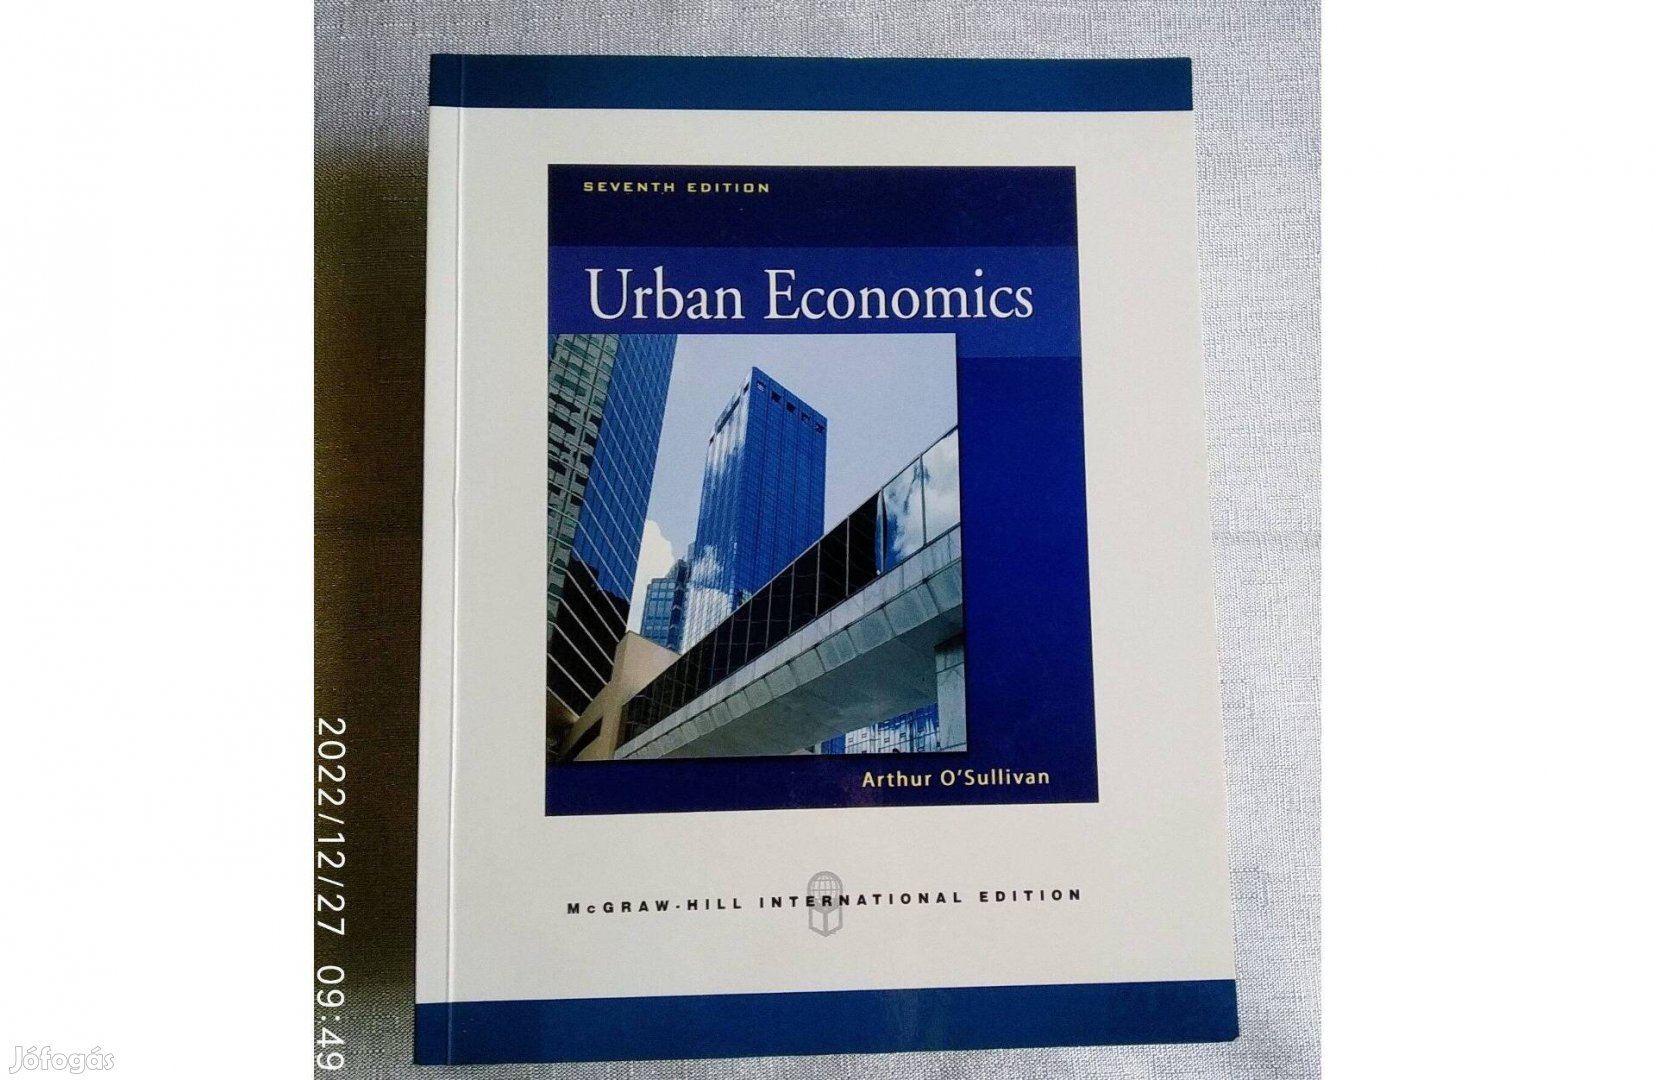 Urban Economics 7th Edition by Arthur O'Sullivan (Author)